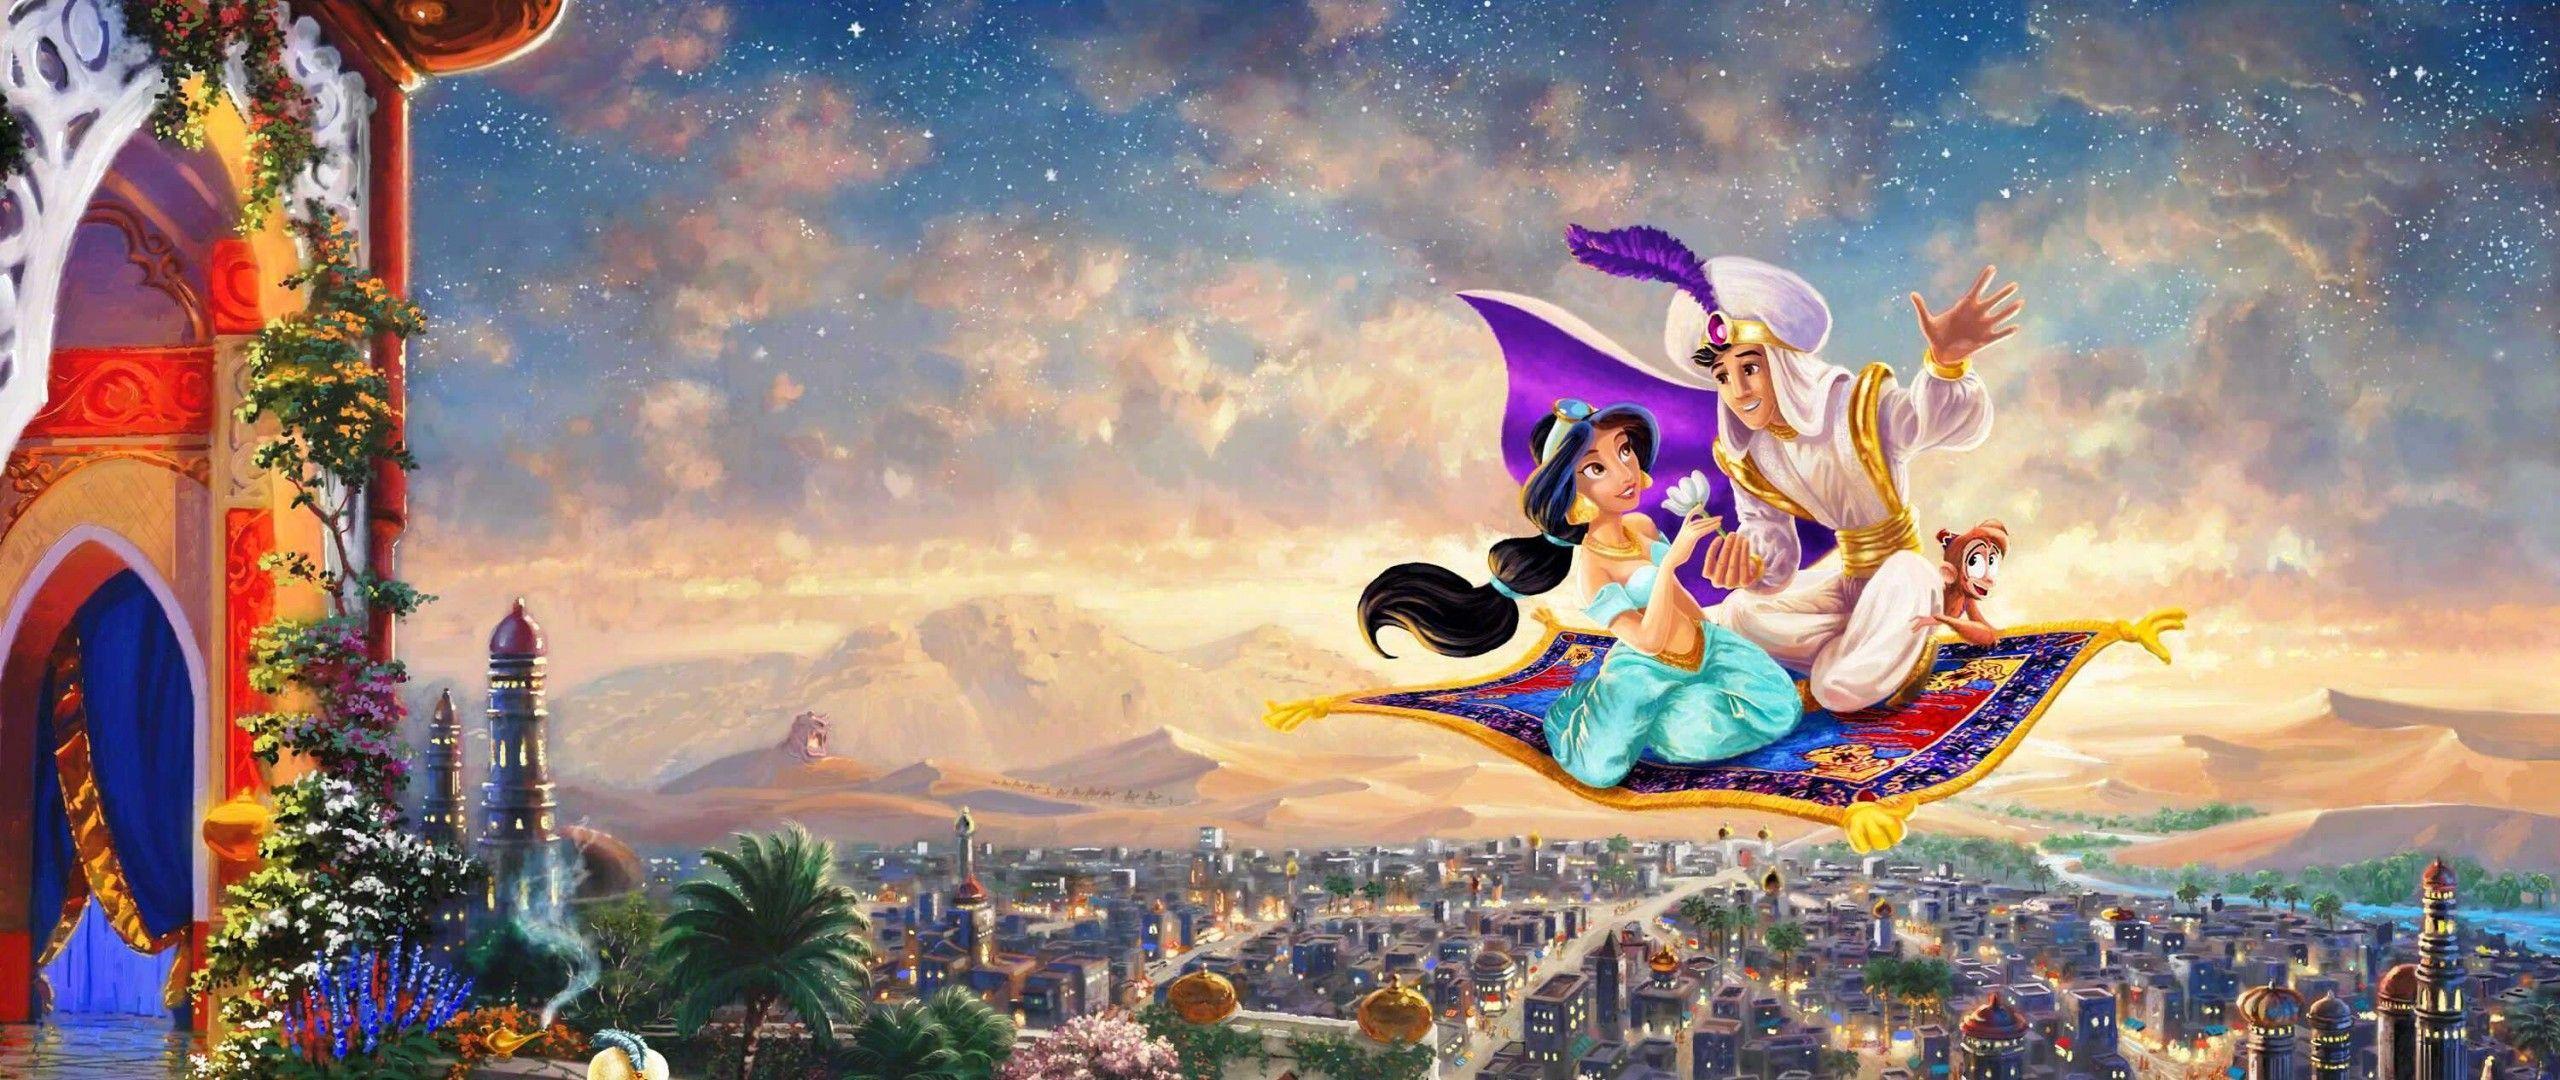 Aladdin 4k Wallpapers Top Free Aladdin 4k Backgrounds Wallpaperaccess